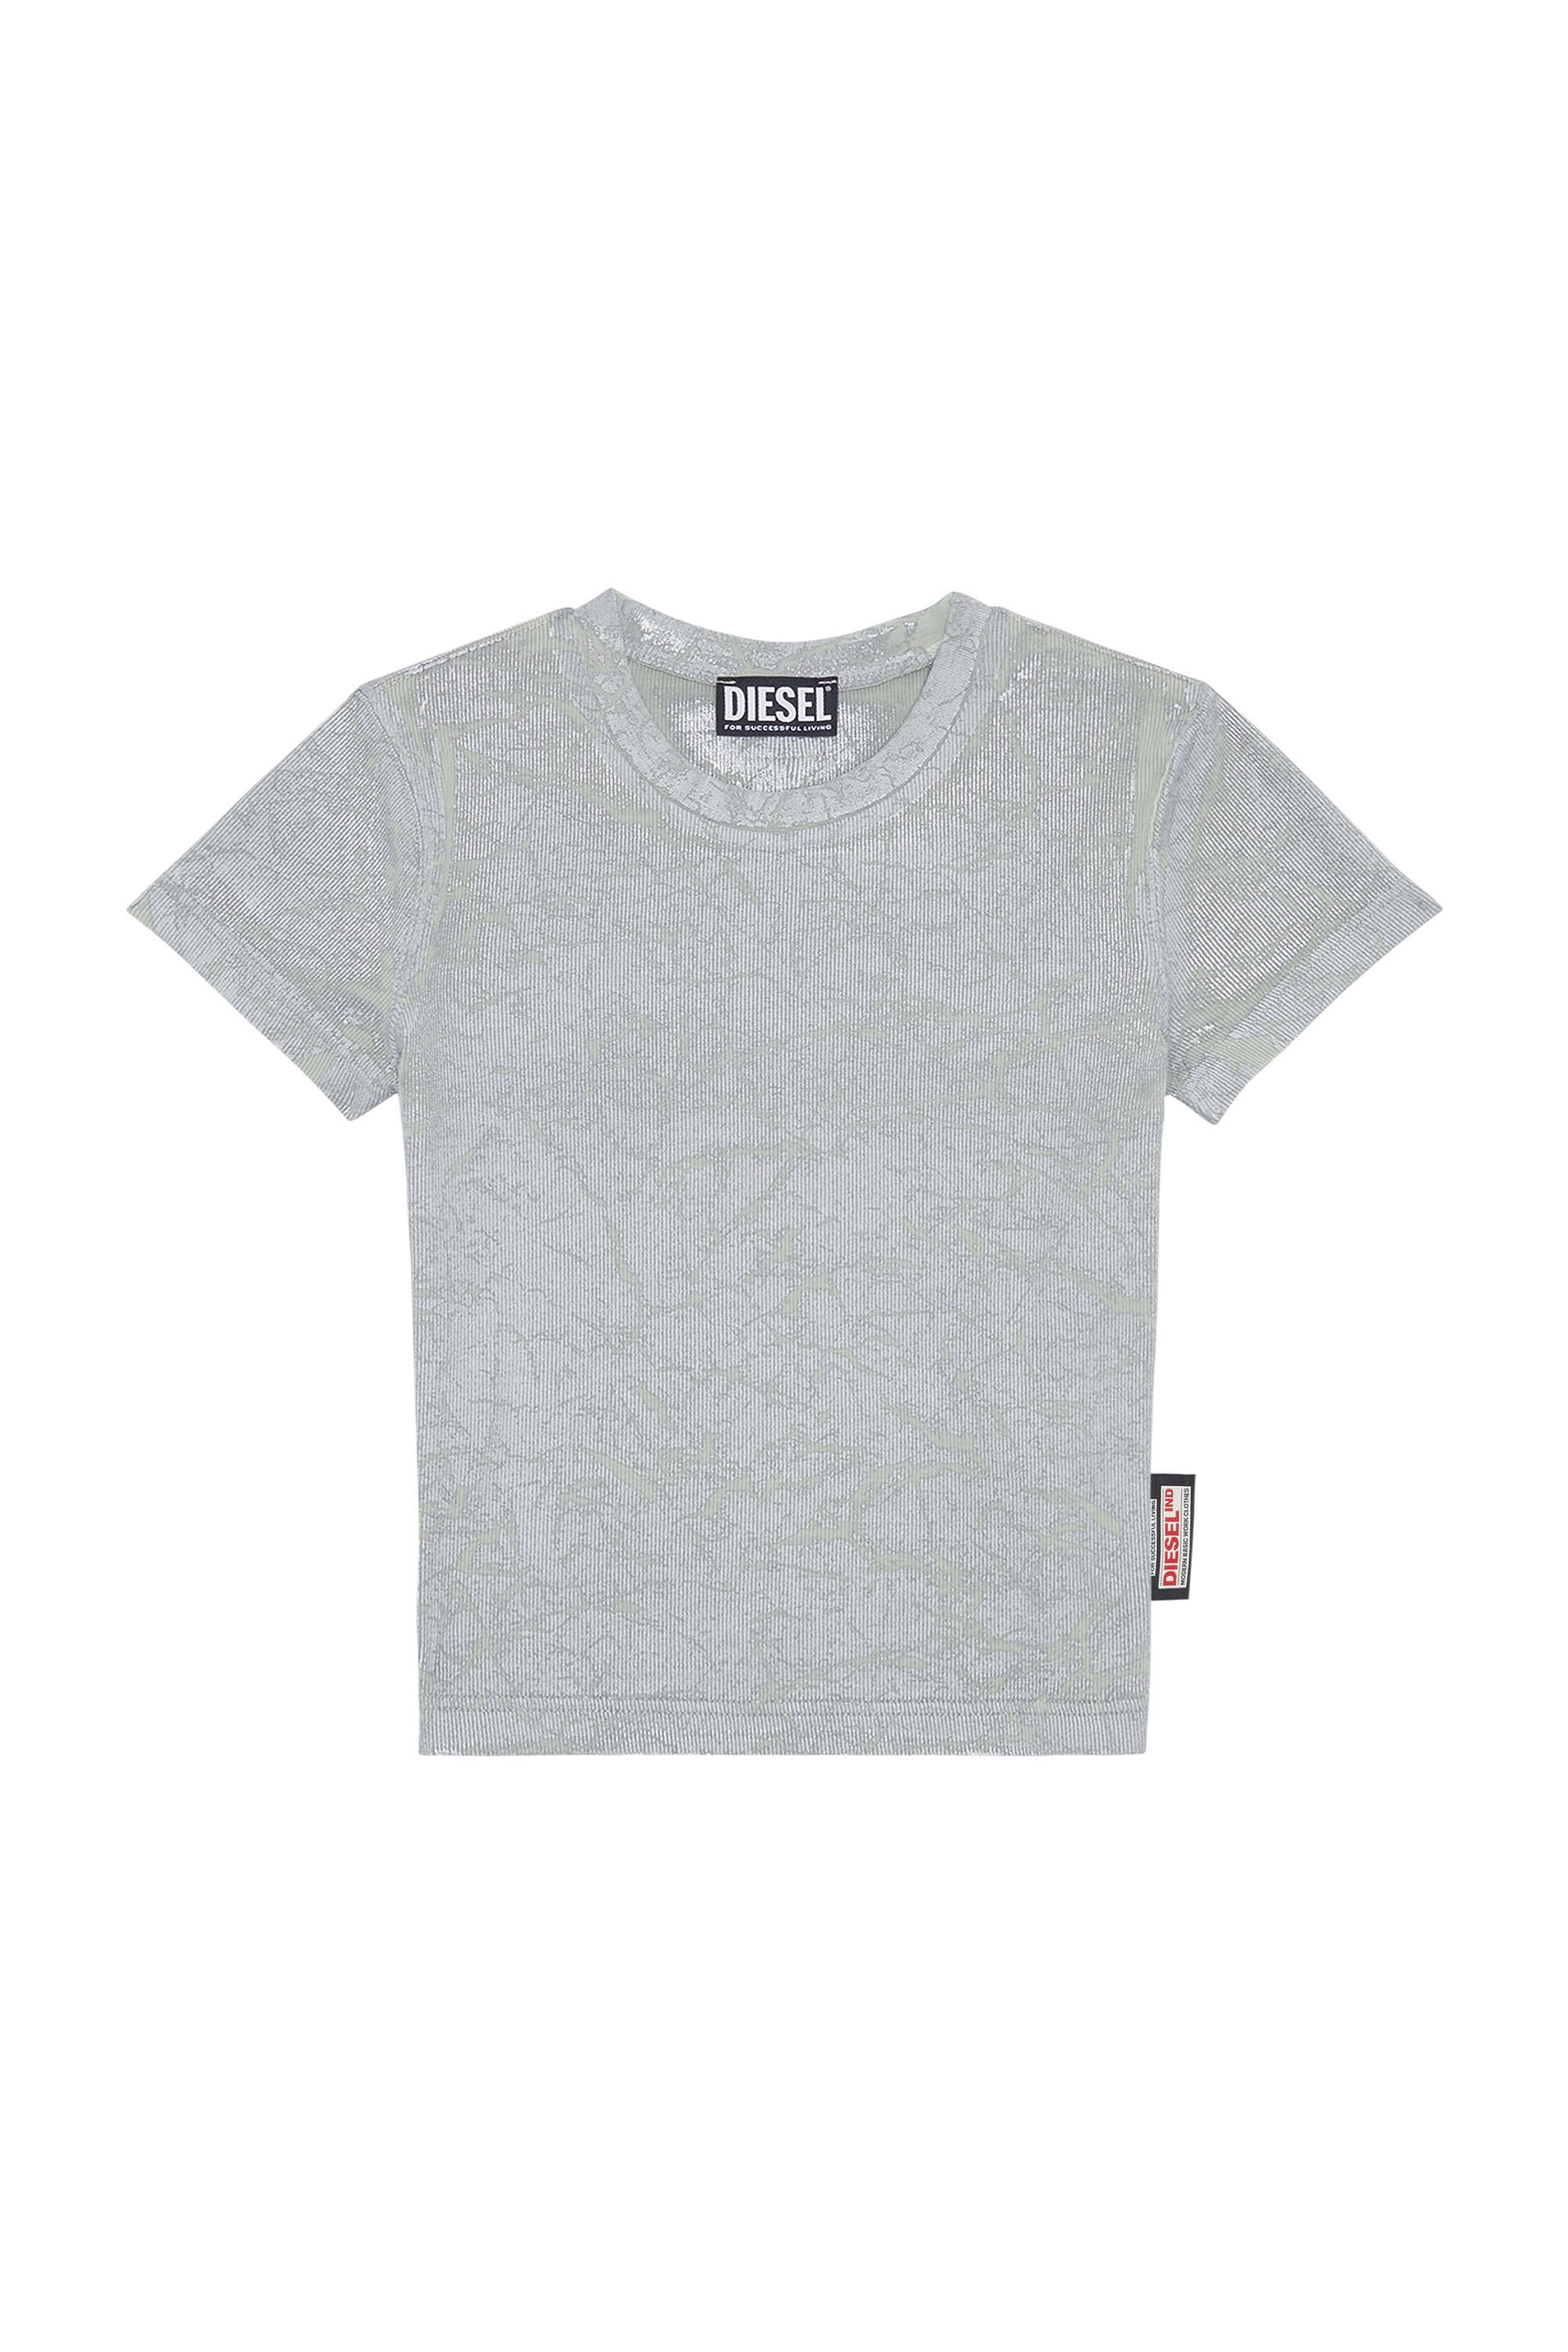 T-SKINZY-E1, Light Grey - T-Shirts